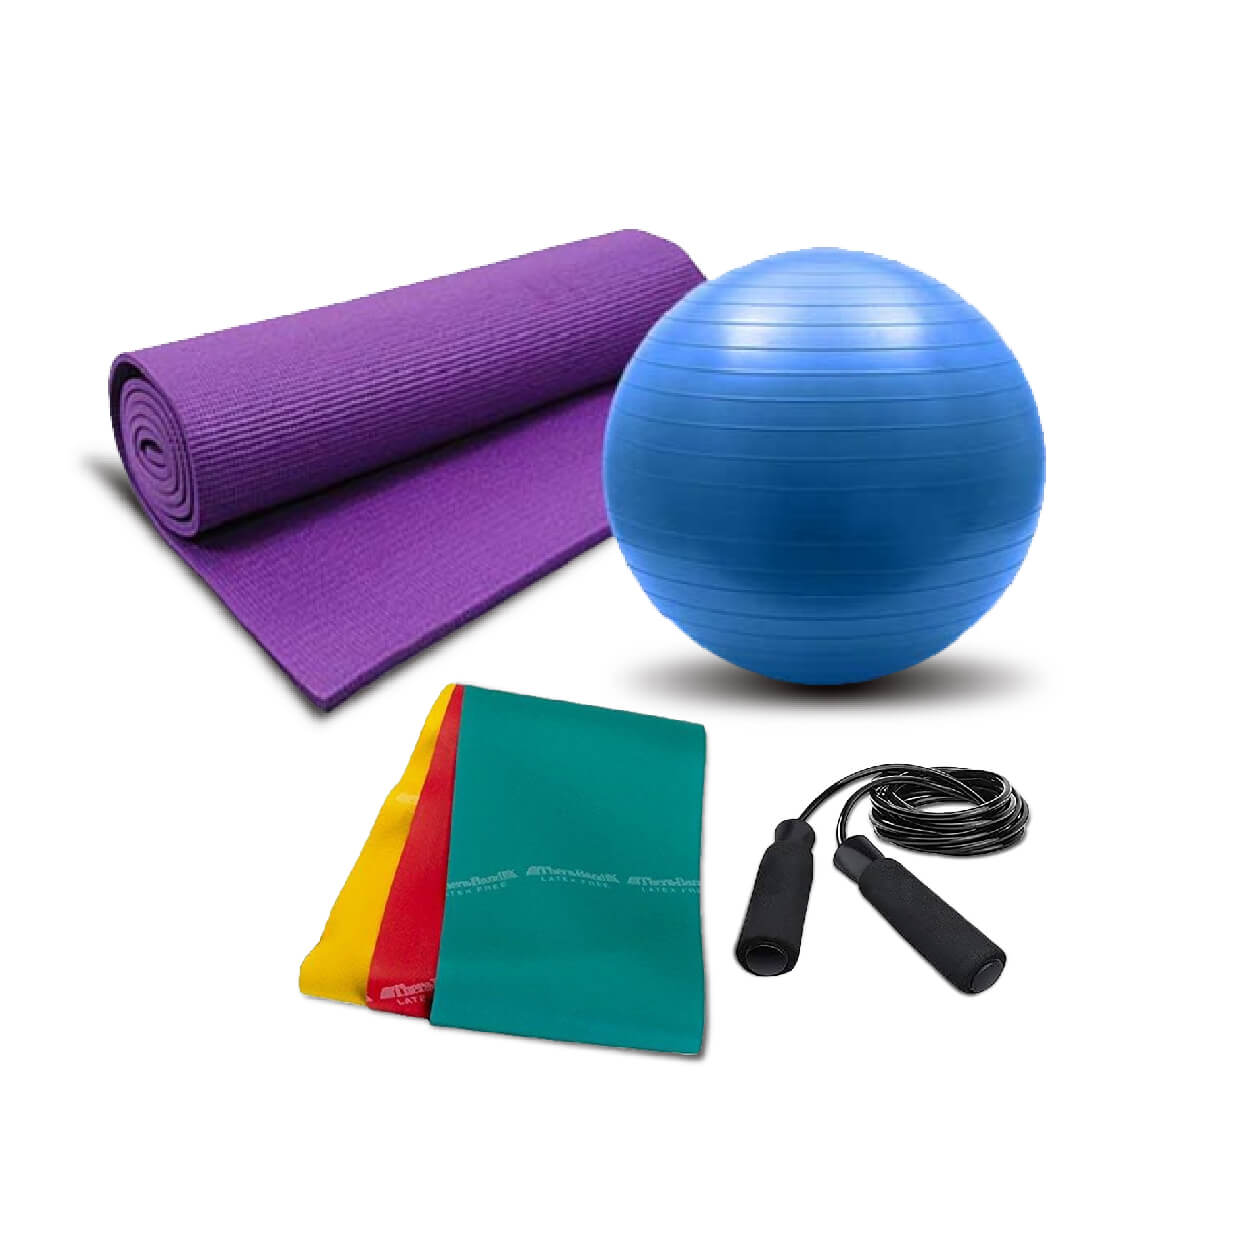 SkyLand Yoga Equipment Set Includes Yoga Mat, Yoga Ball & Yoga